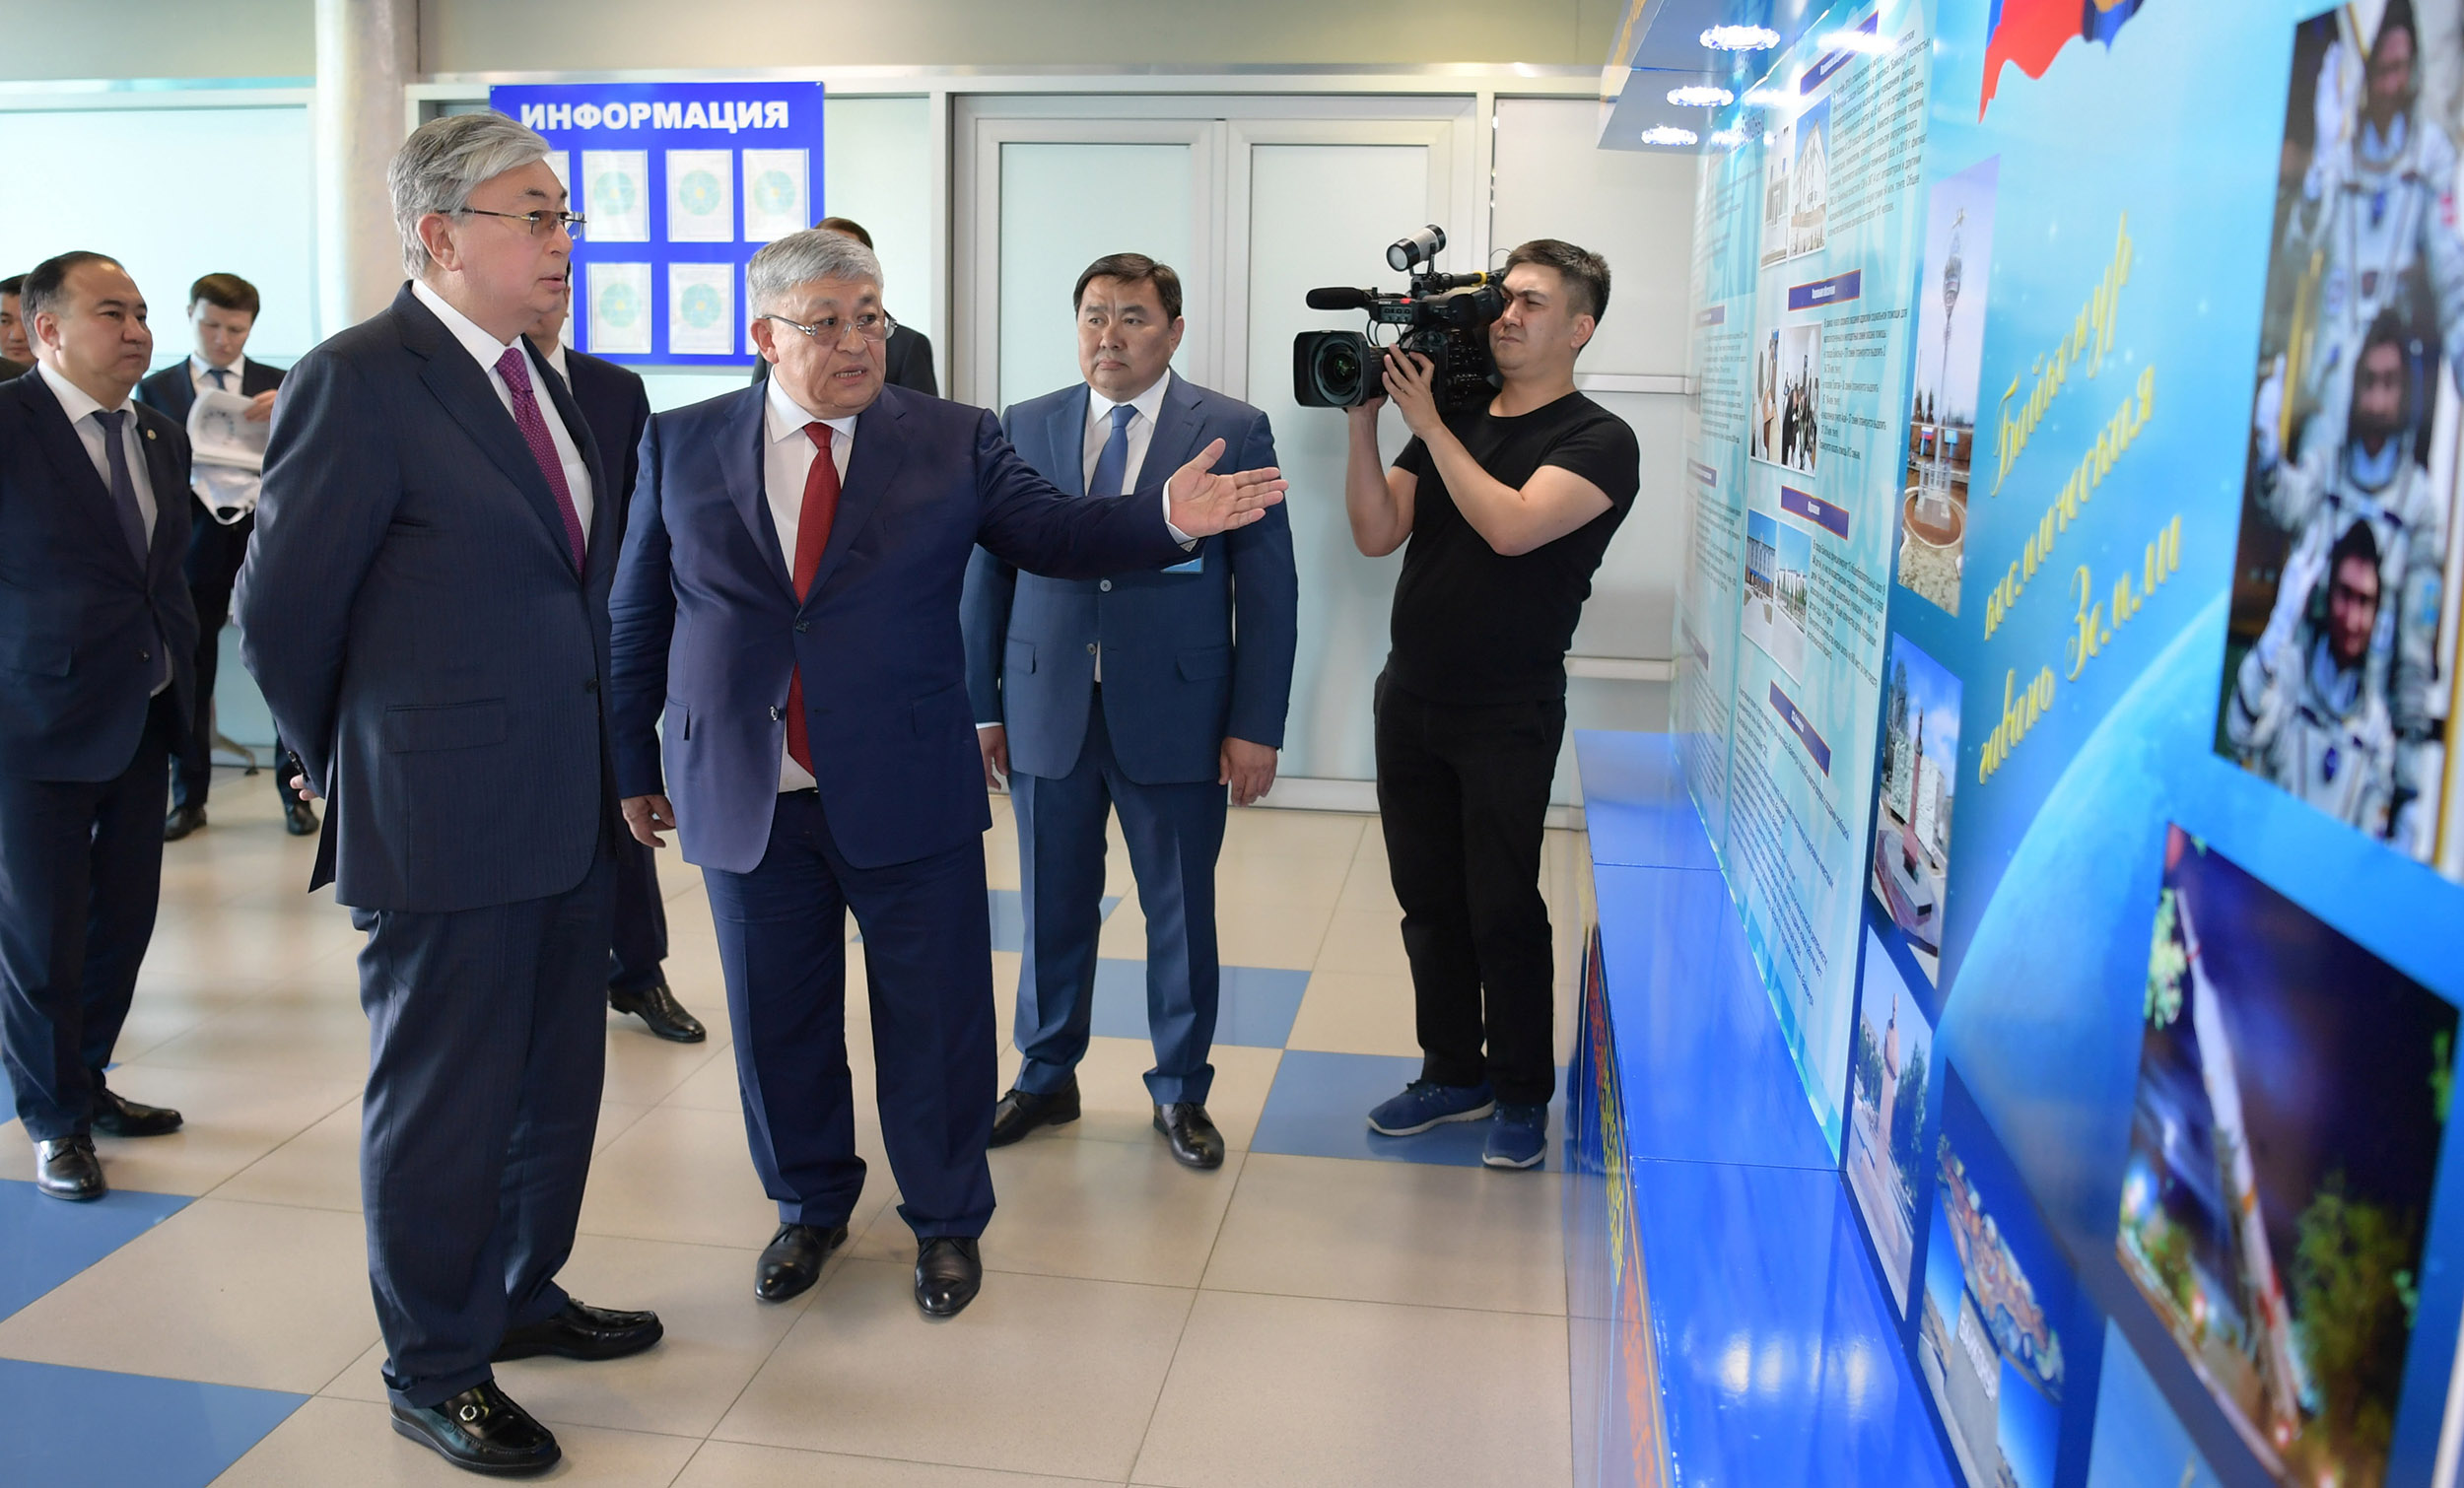 Kassym-Jomart Tokayev familiarized with the development prospects of the city of Baikonur